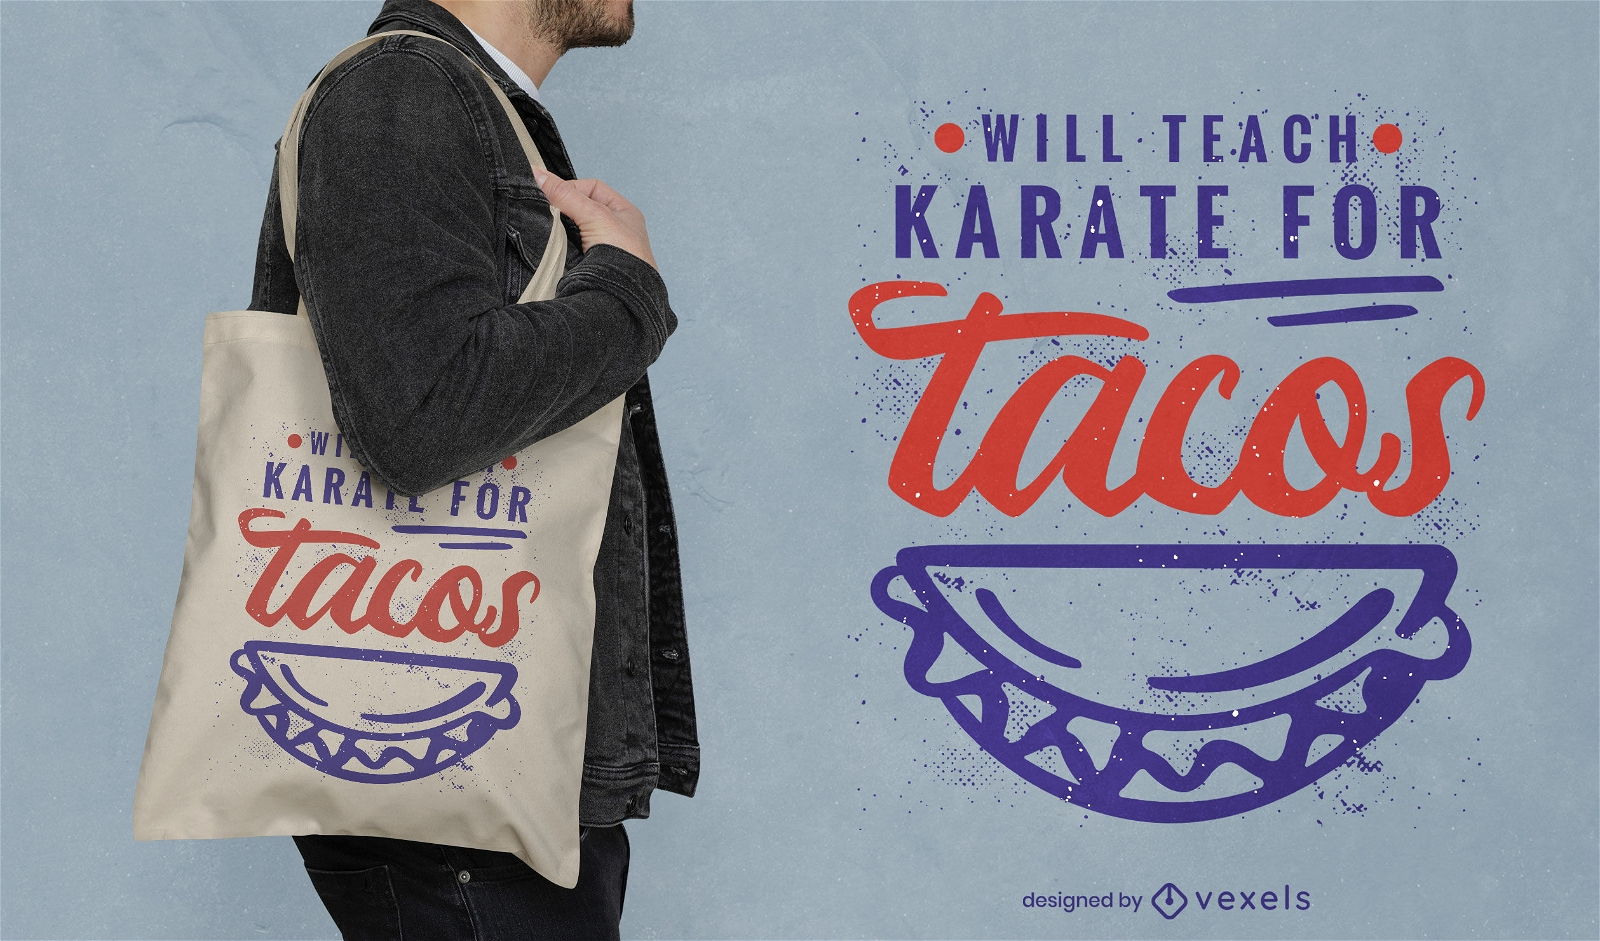 Teach karate for tacos tote bag design